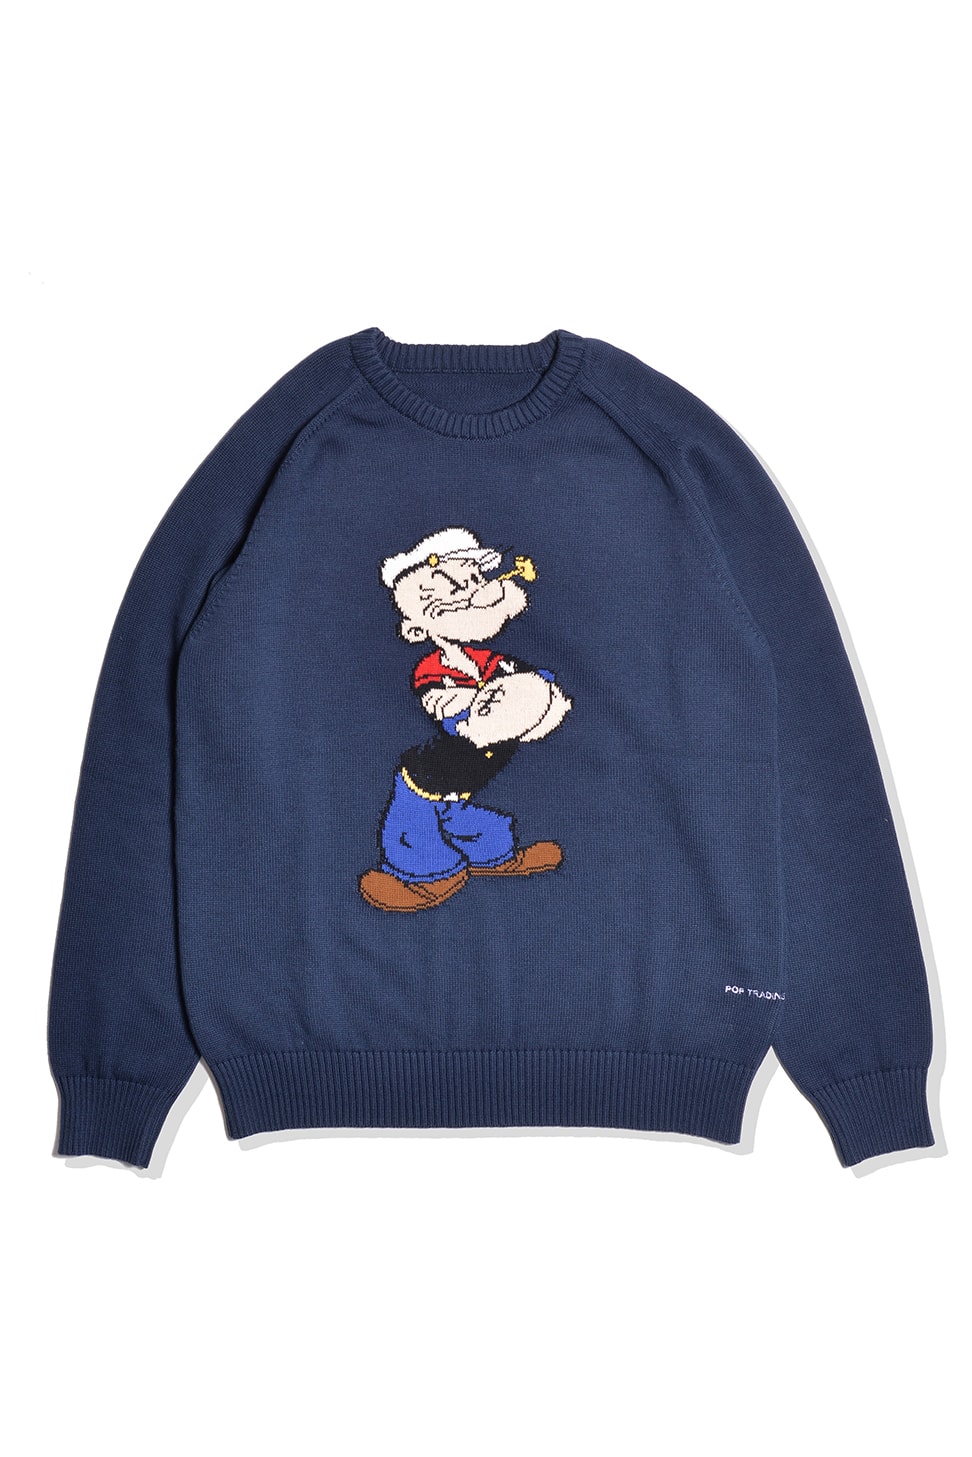 POP Trading Company Popeye POP/EYE Hoodies Sweatshirts Capsule Collection Collab Beauty & Youth Socks Baseball Hats